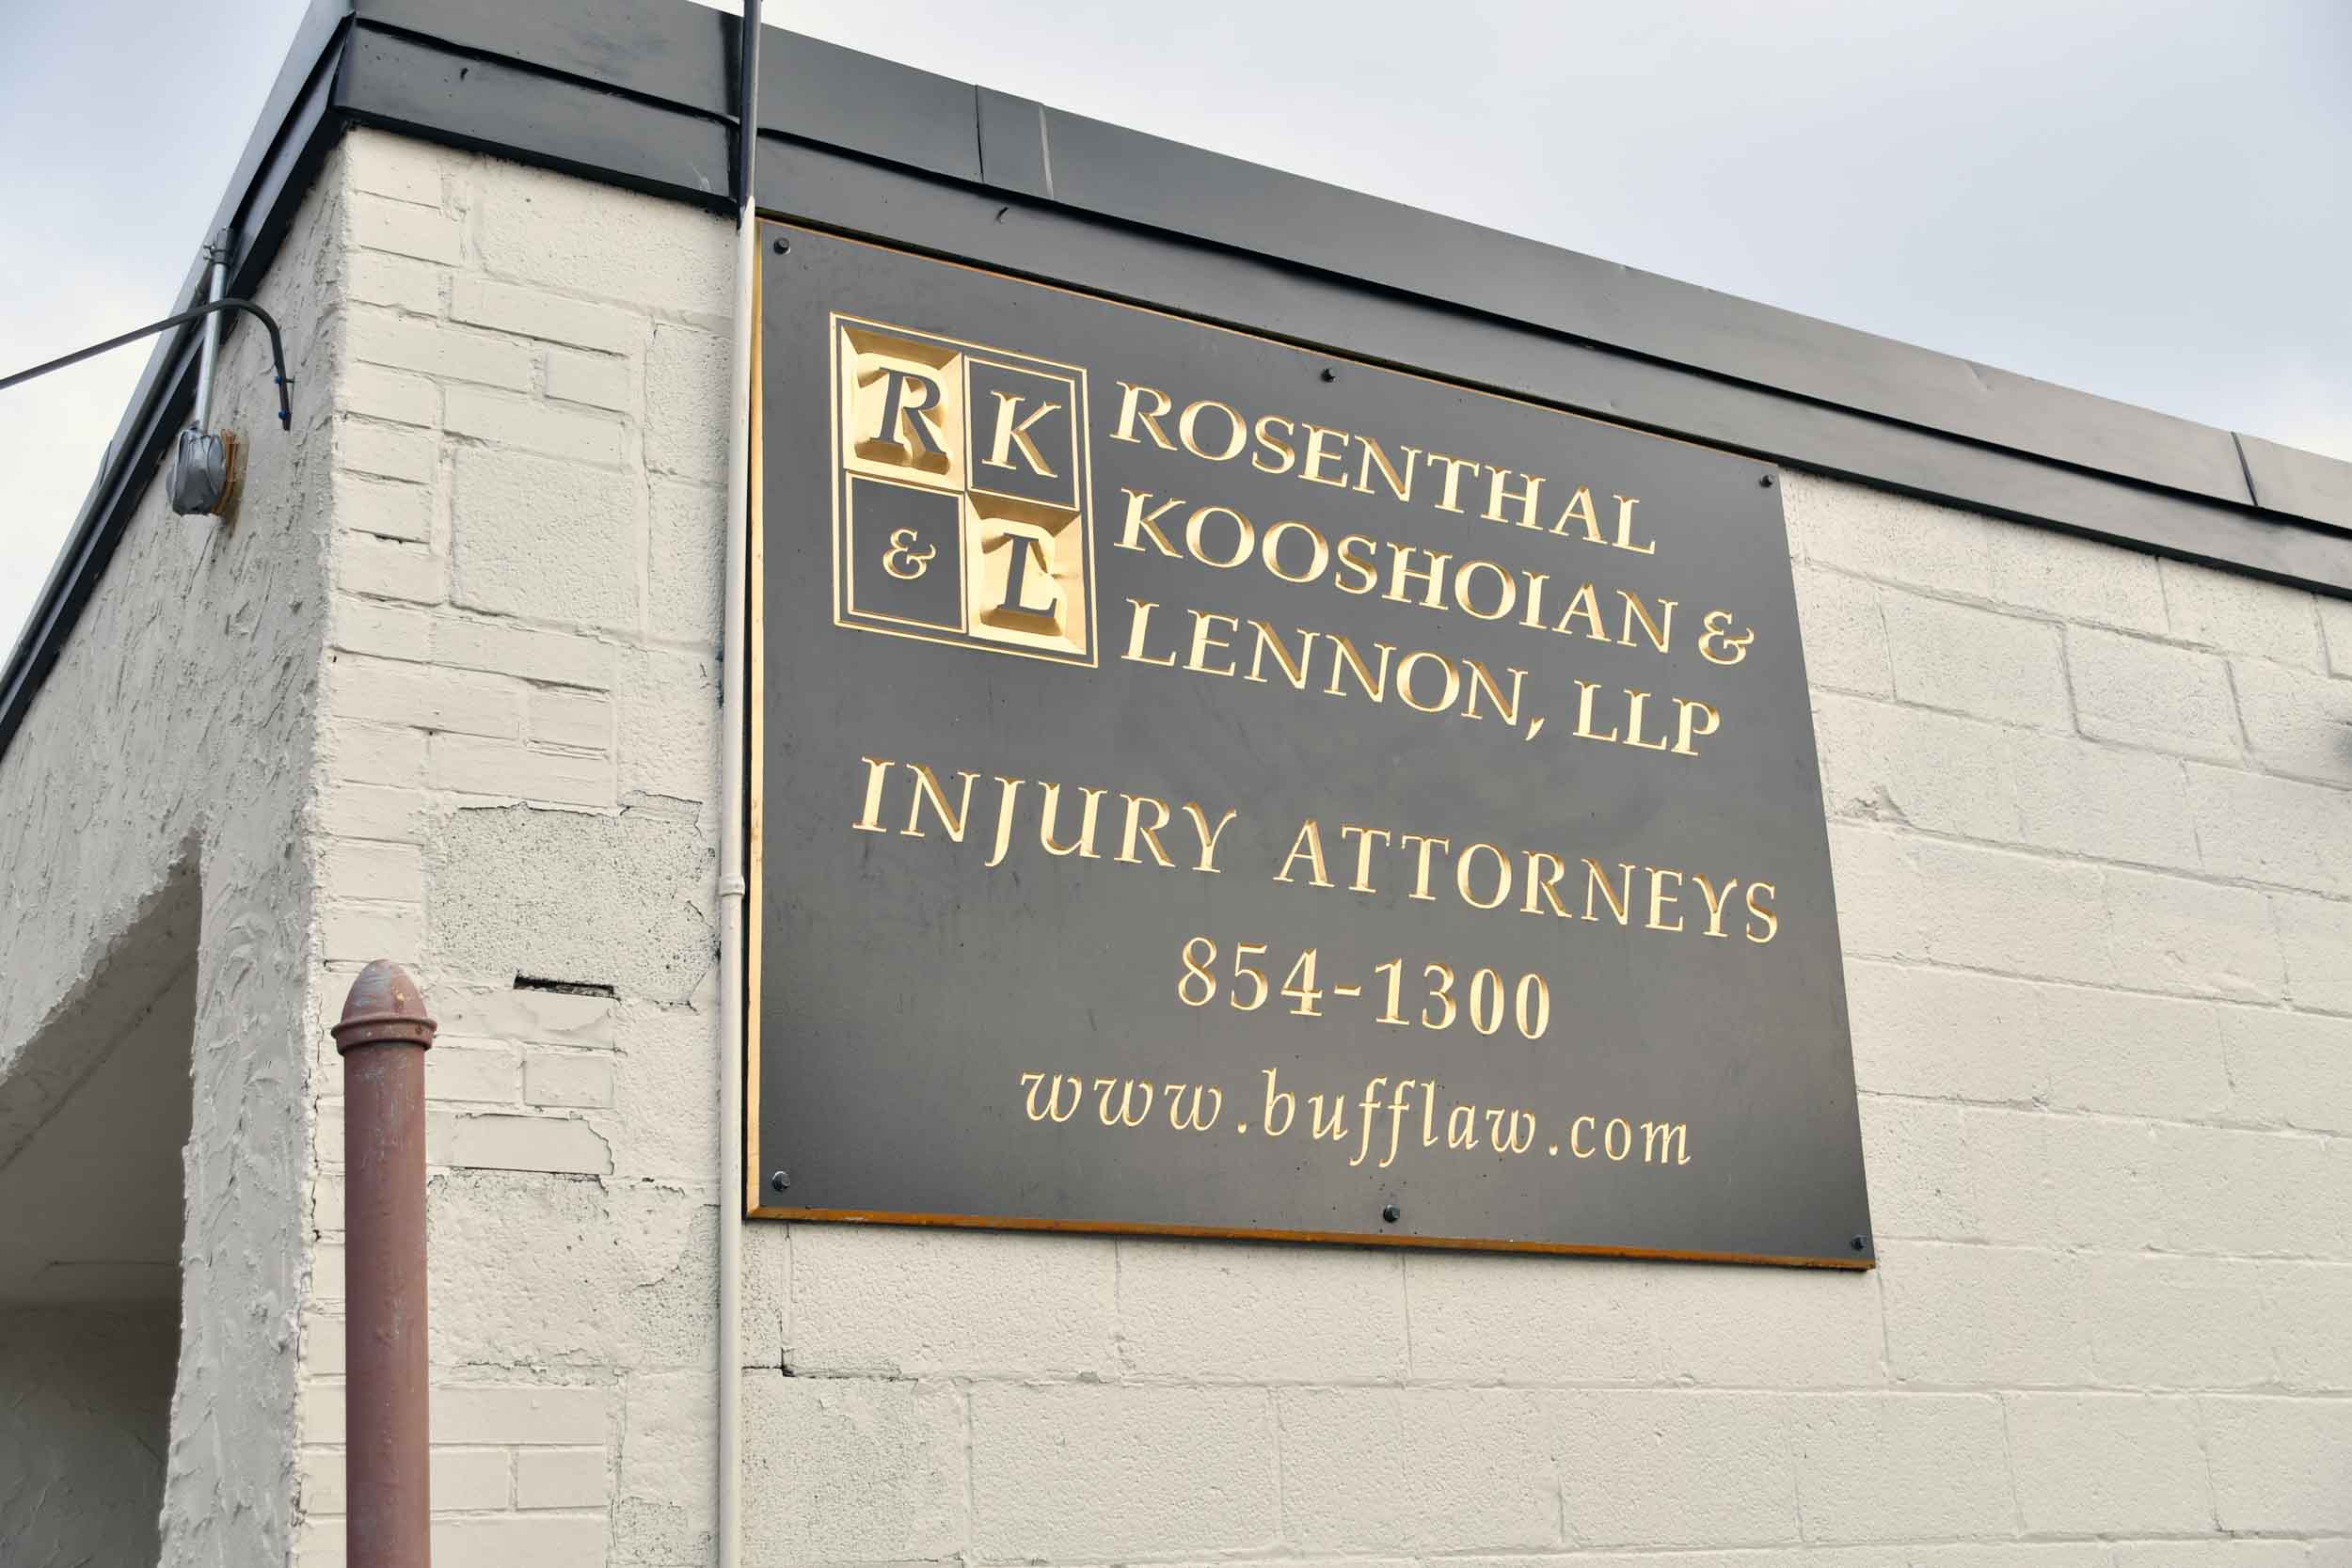 Rosenthal Kooshoian & Lennon, LLP | Injury Attorneys